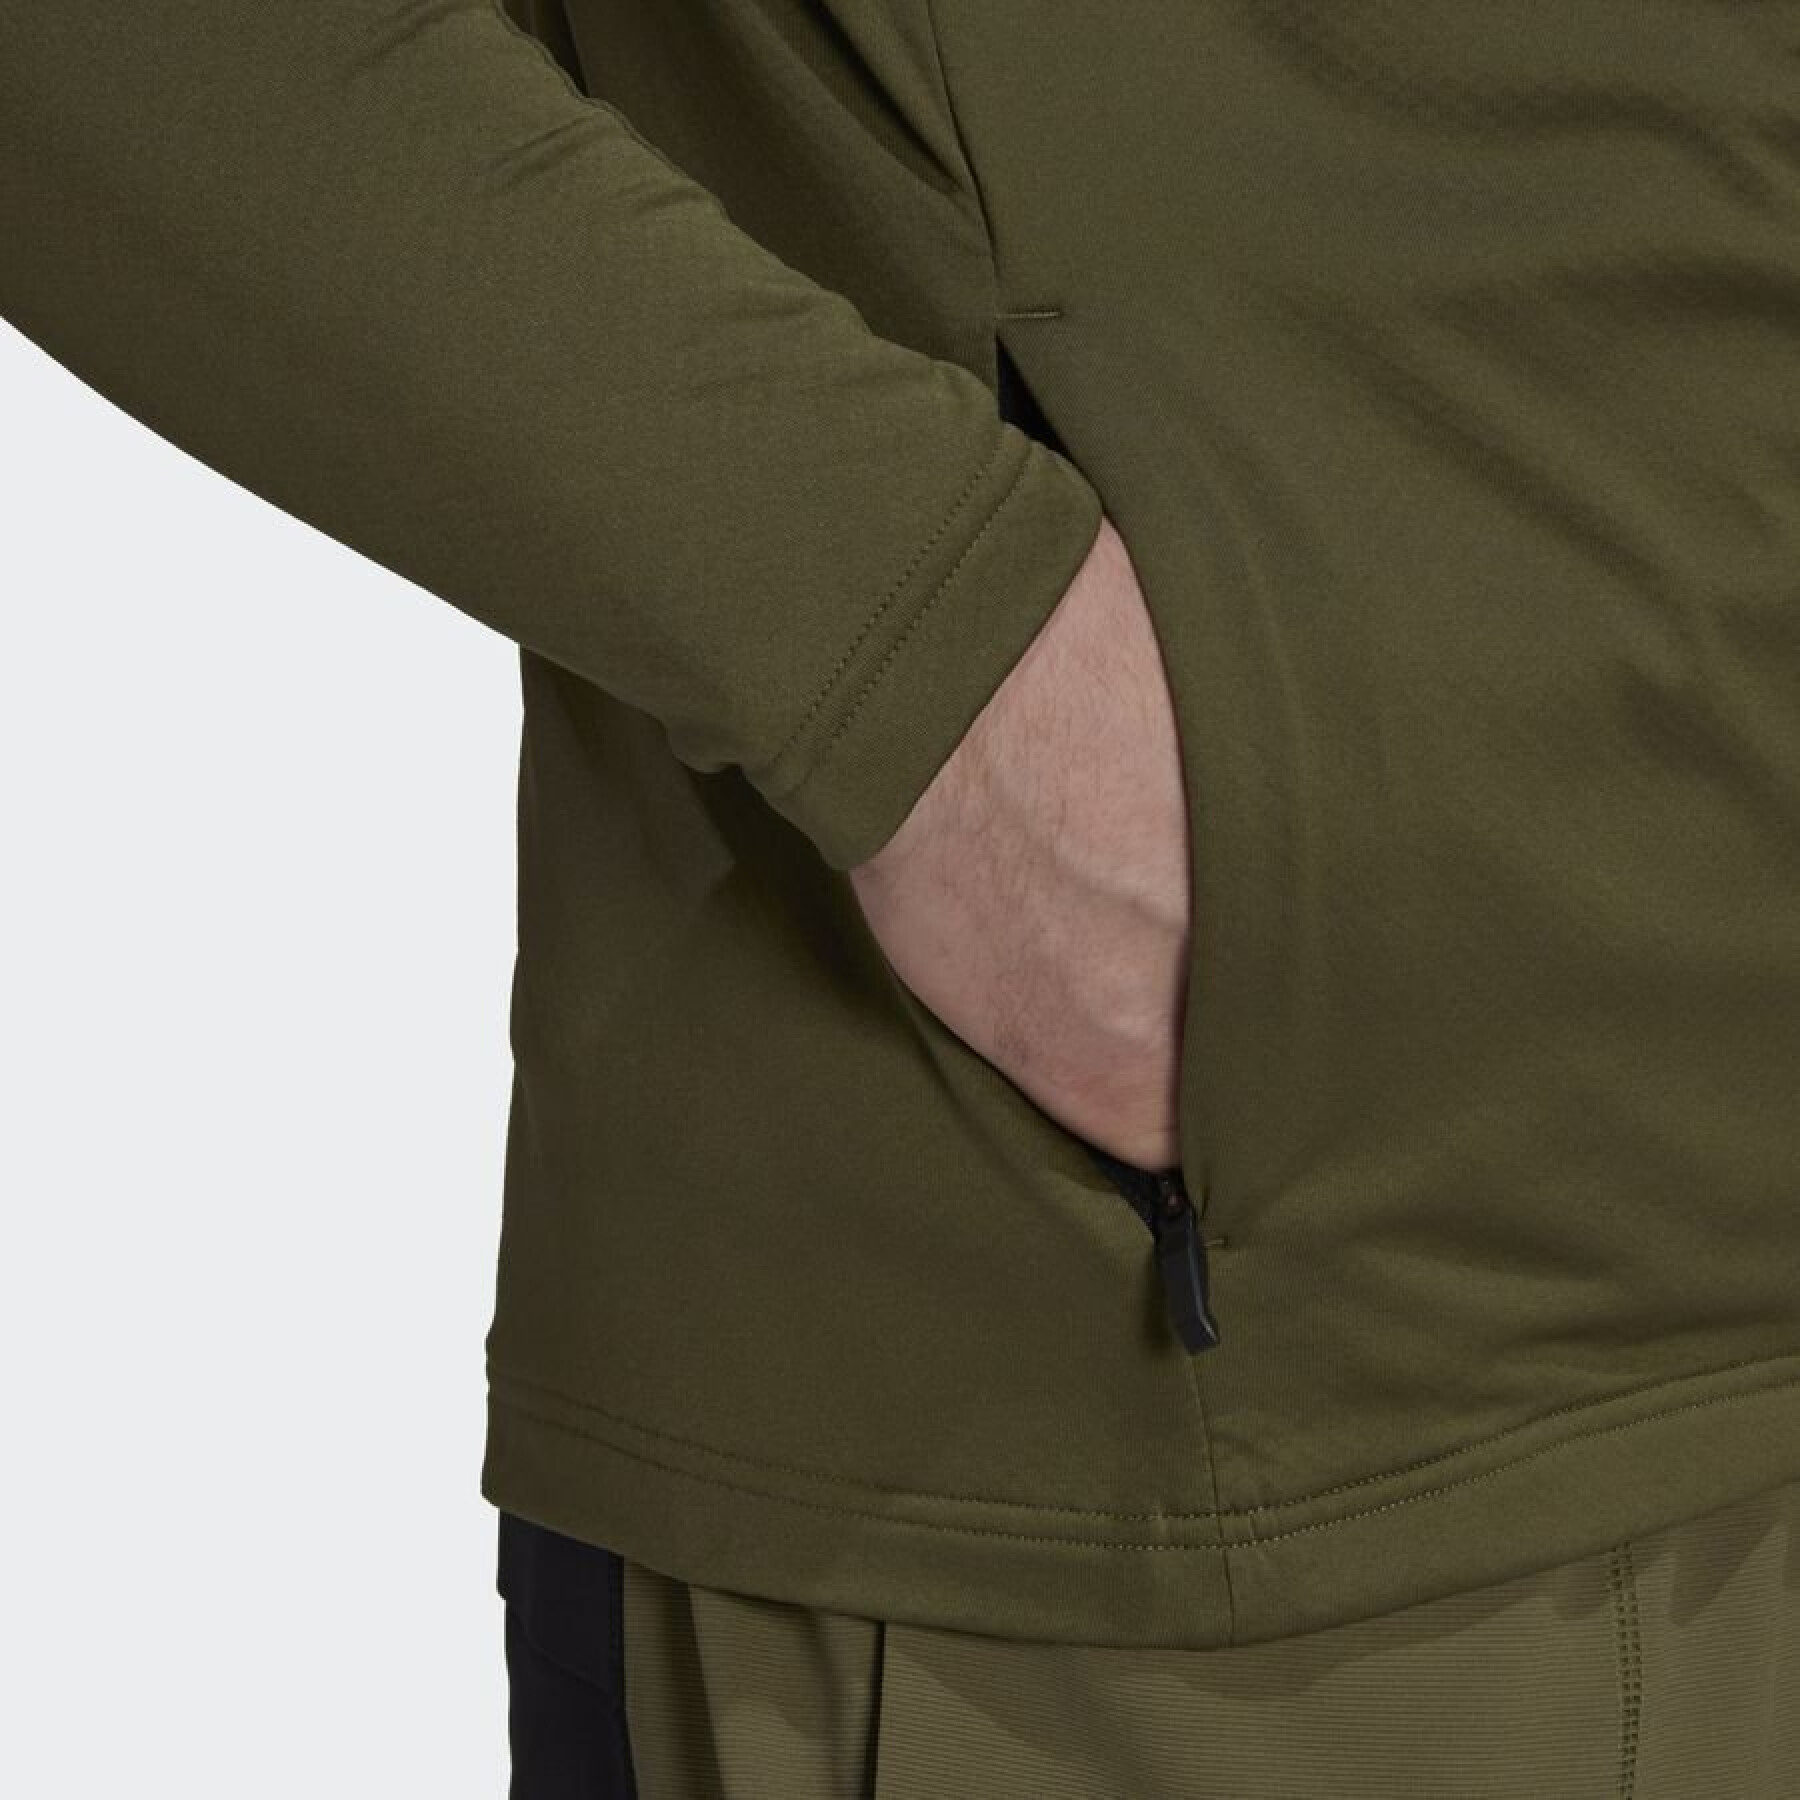 Sweat jacket adidas Terrex Multi Primegreen Fleece